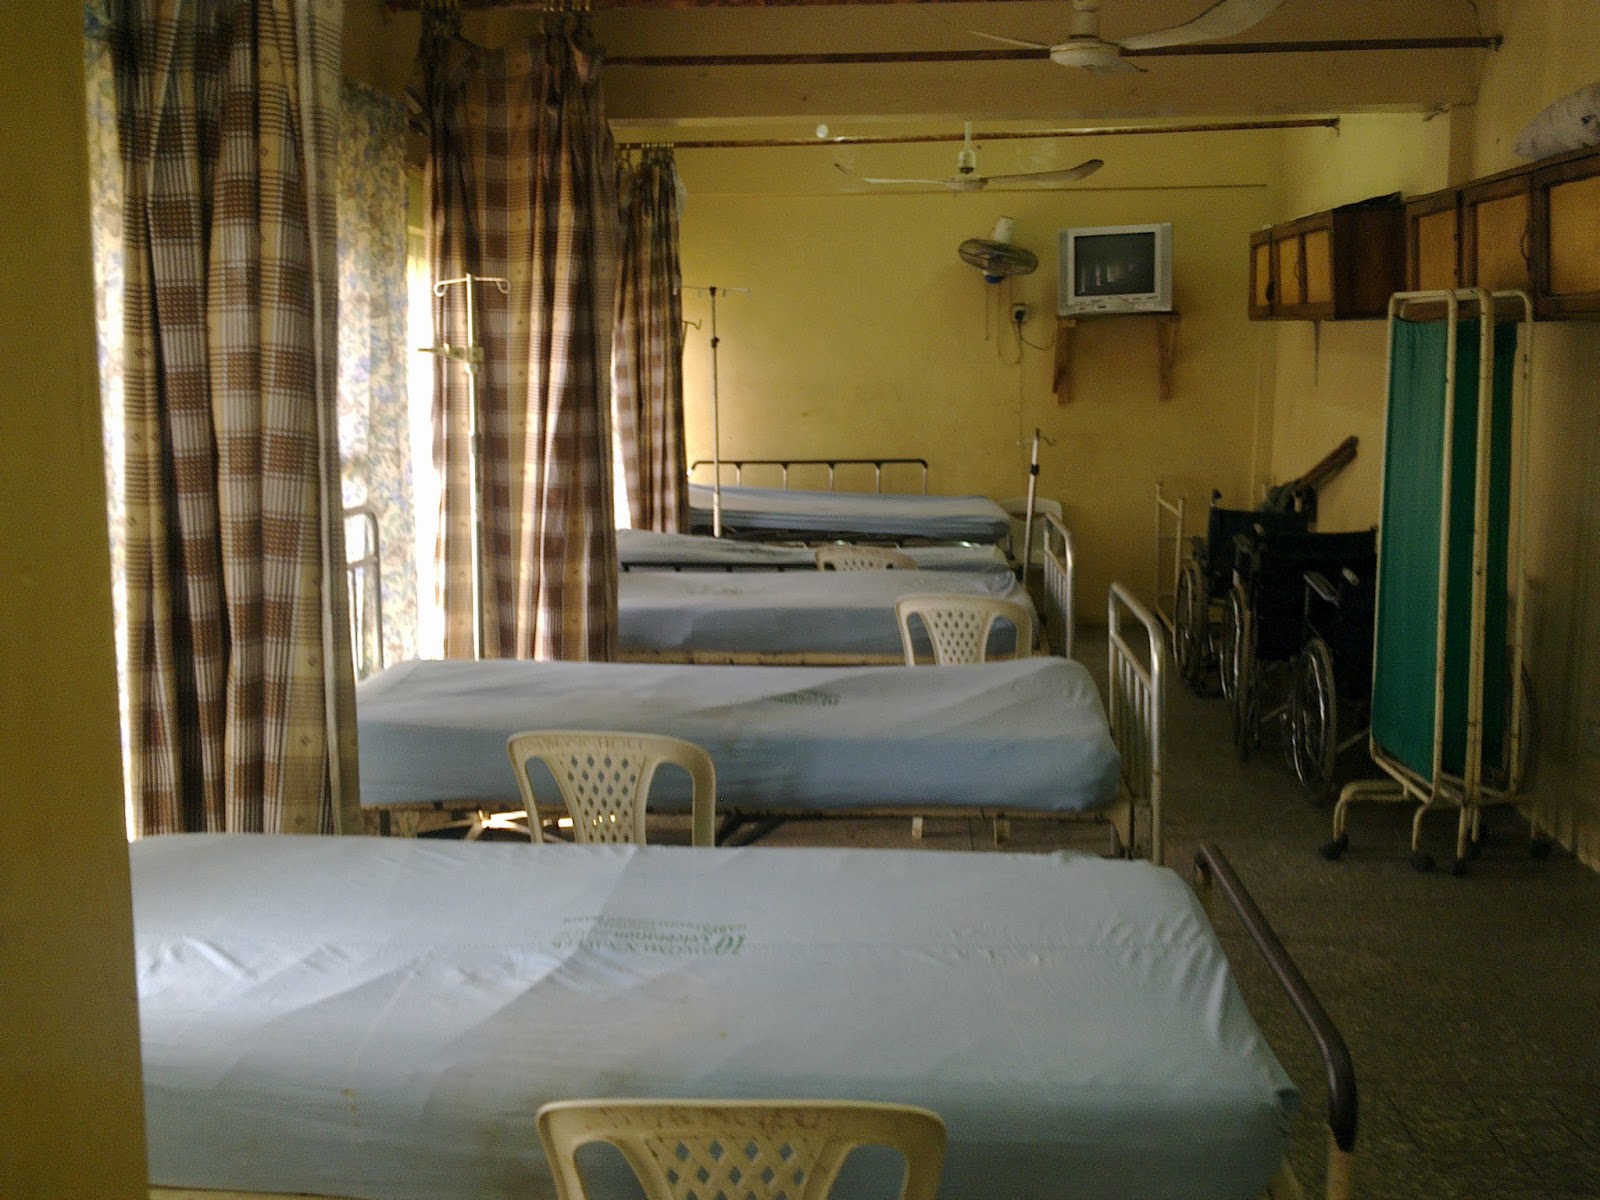 nigerian doctors strike